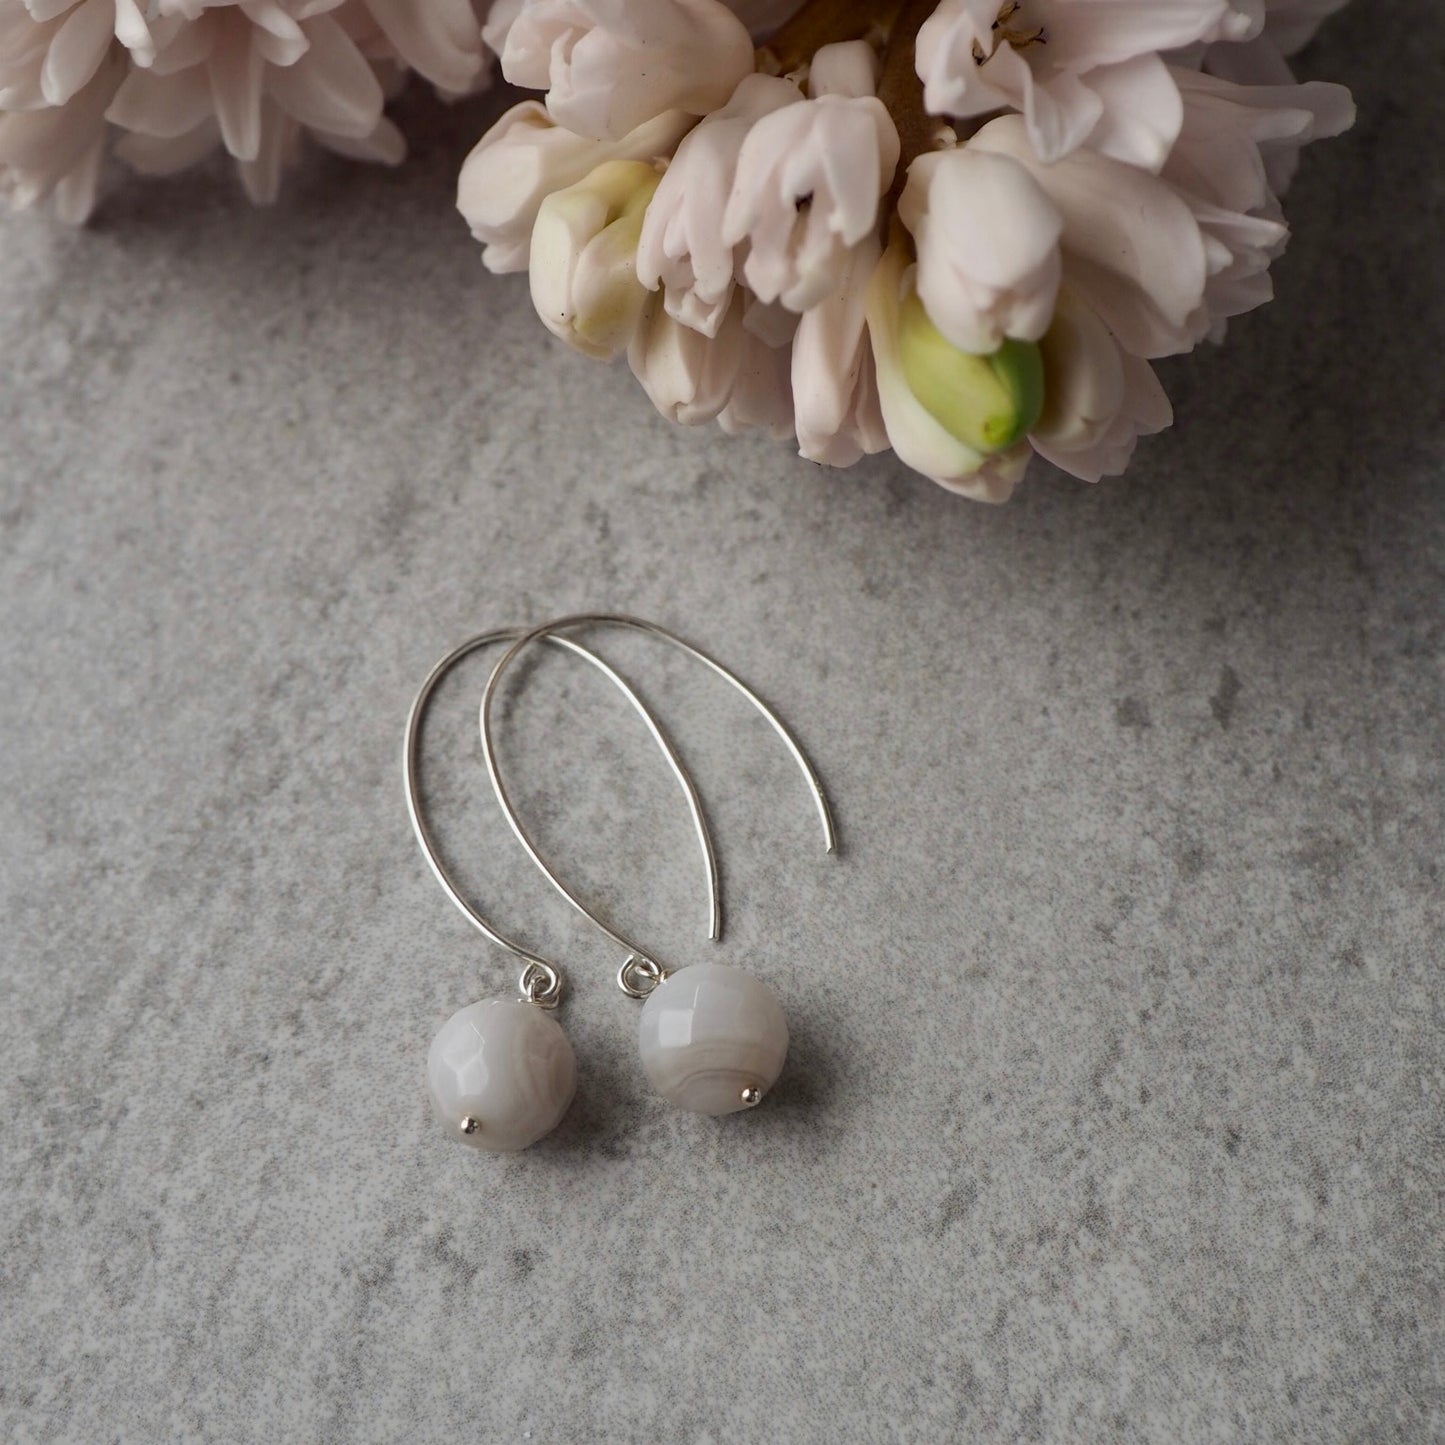 Made in Canada Modern Gemstone Earrings by Wallis Designs